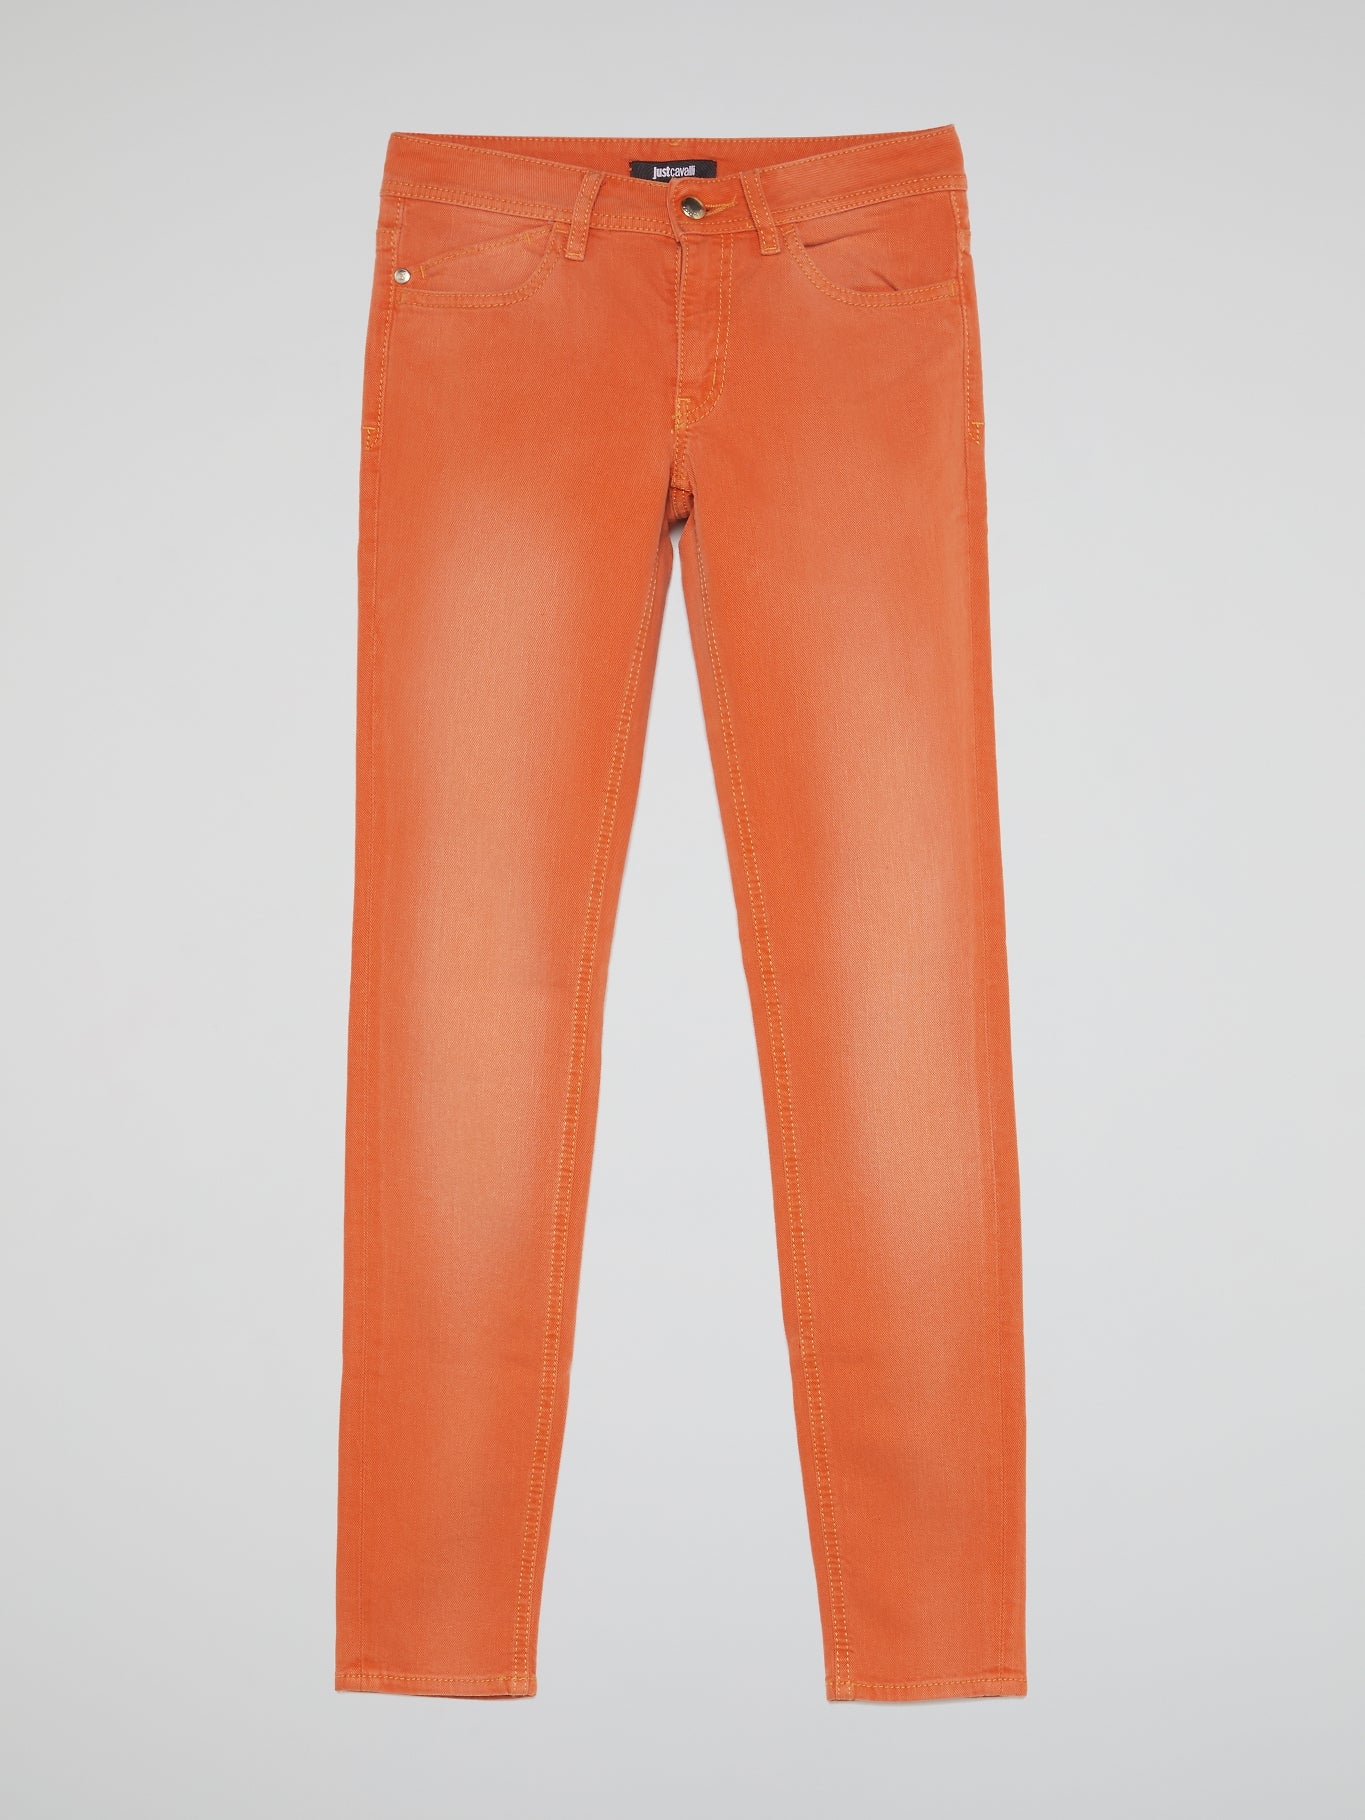 Orange Slim Fit Jeans